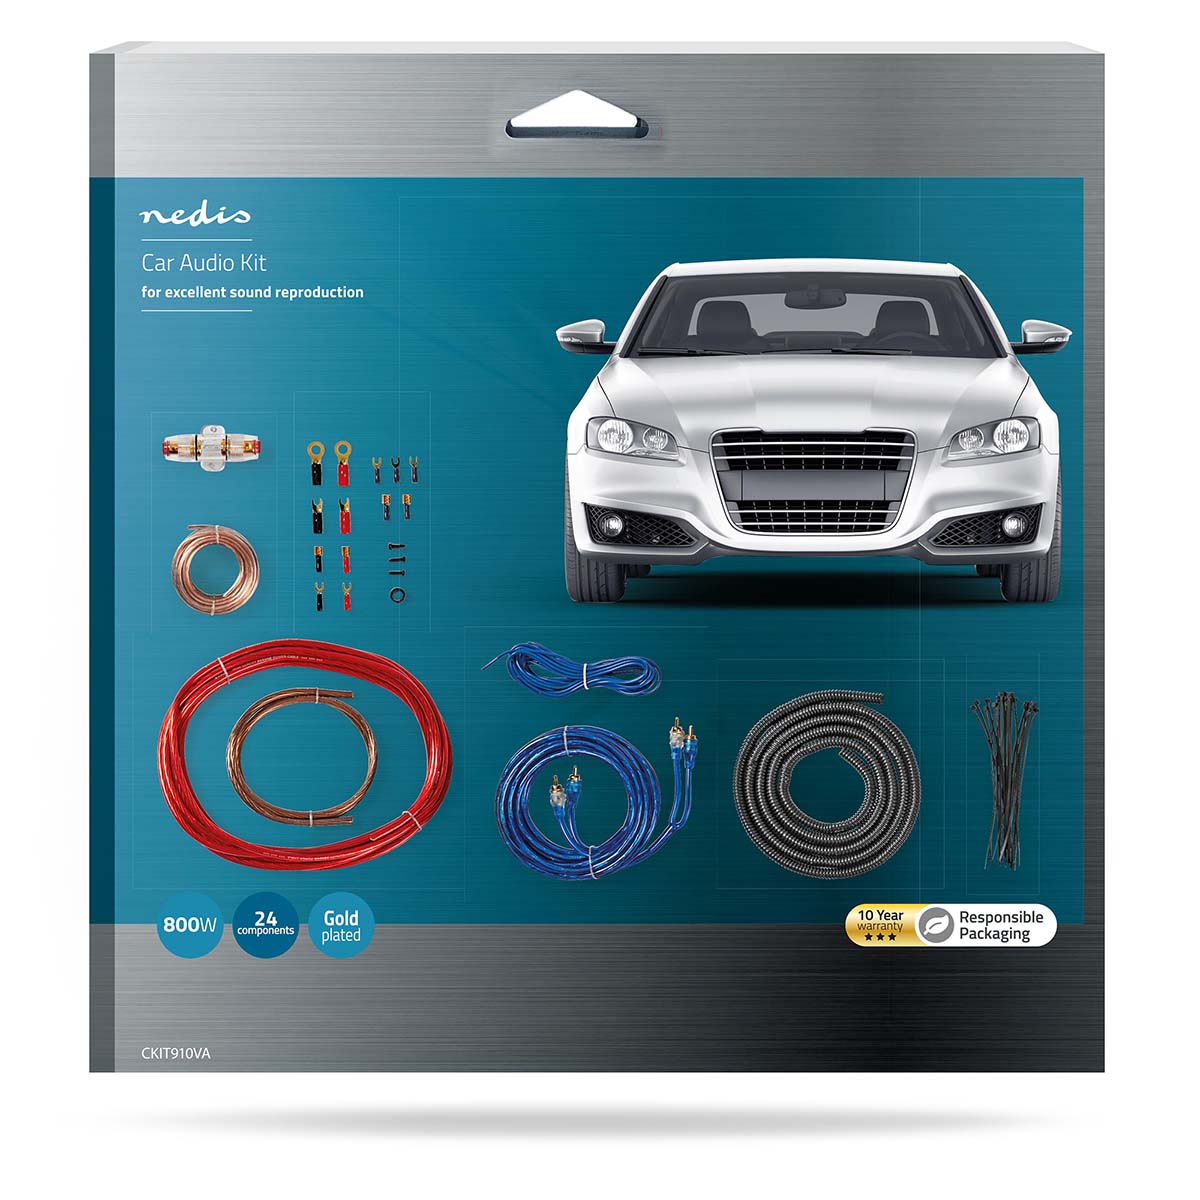 verkoper Postcode ui Car Audio Connector Kit | 800 W | Nickel Plated | Blister